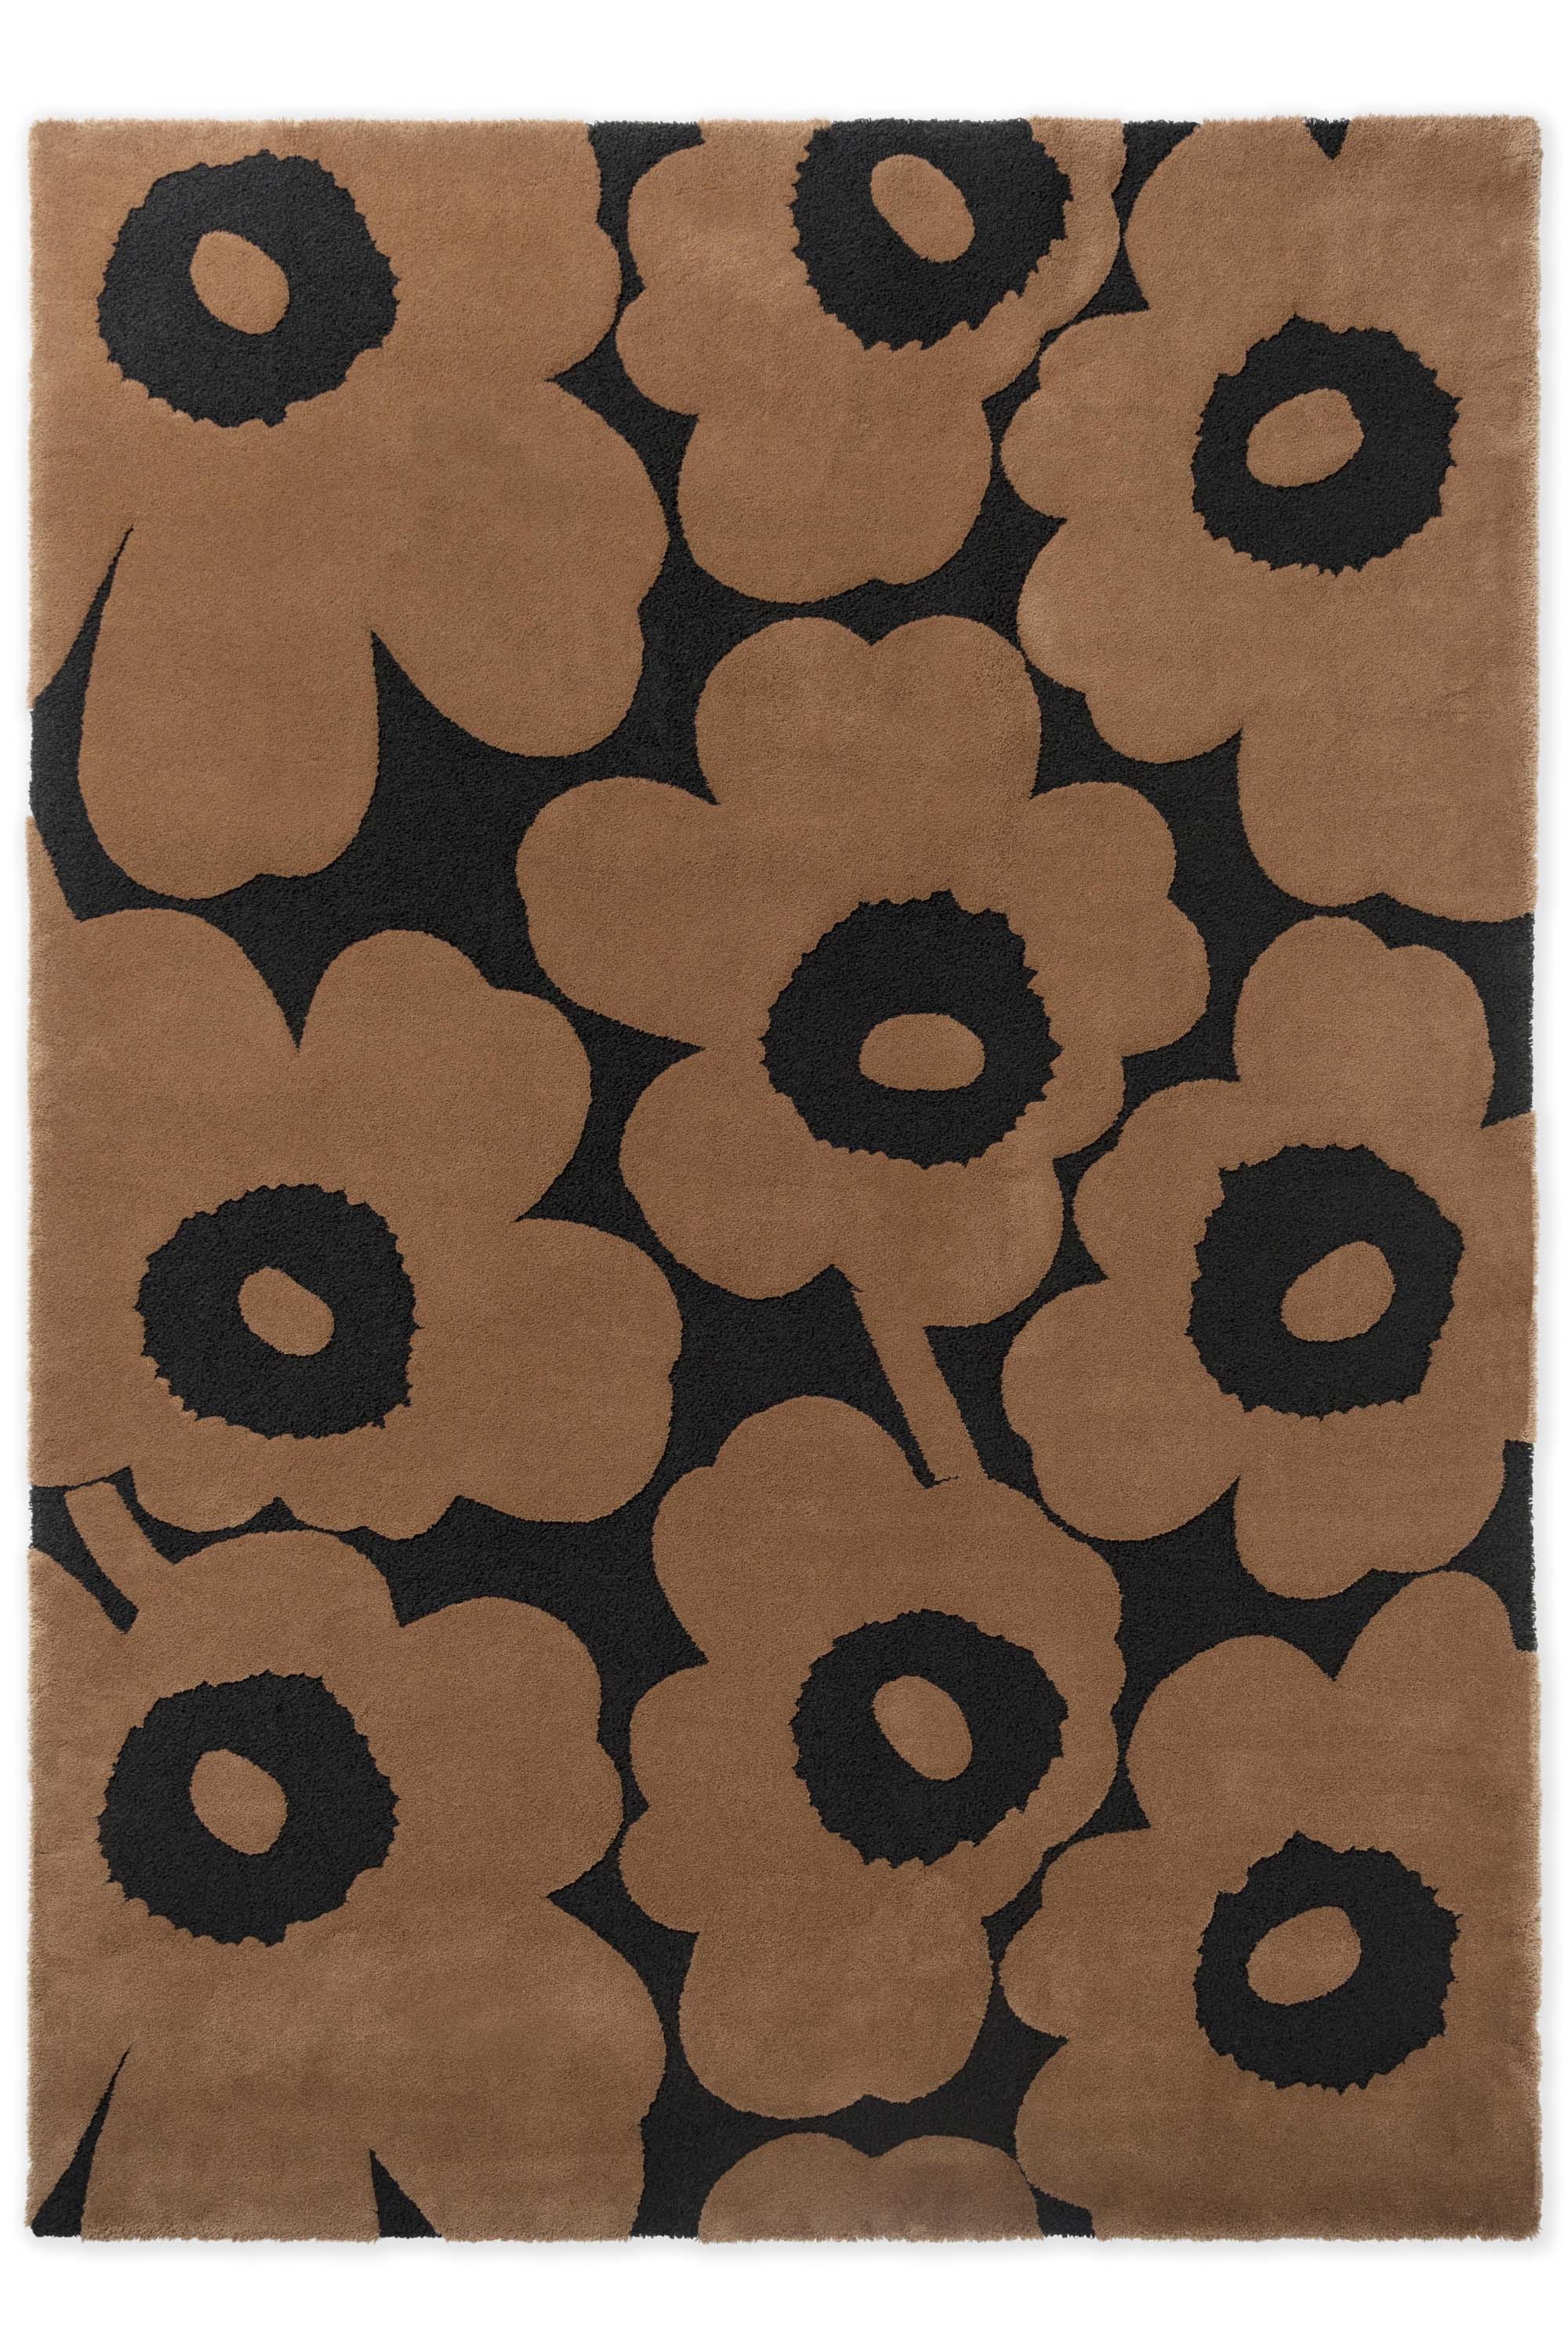 Brown patterned floral rug 